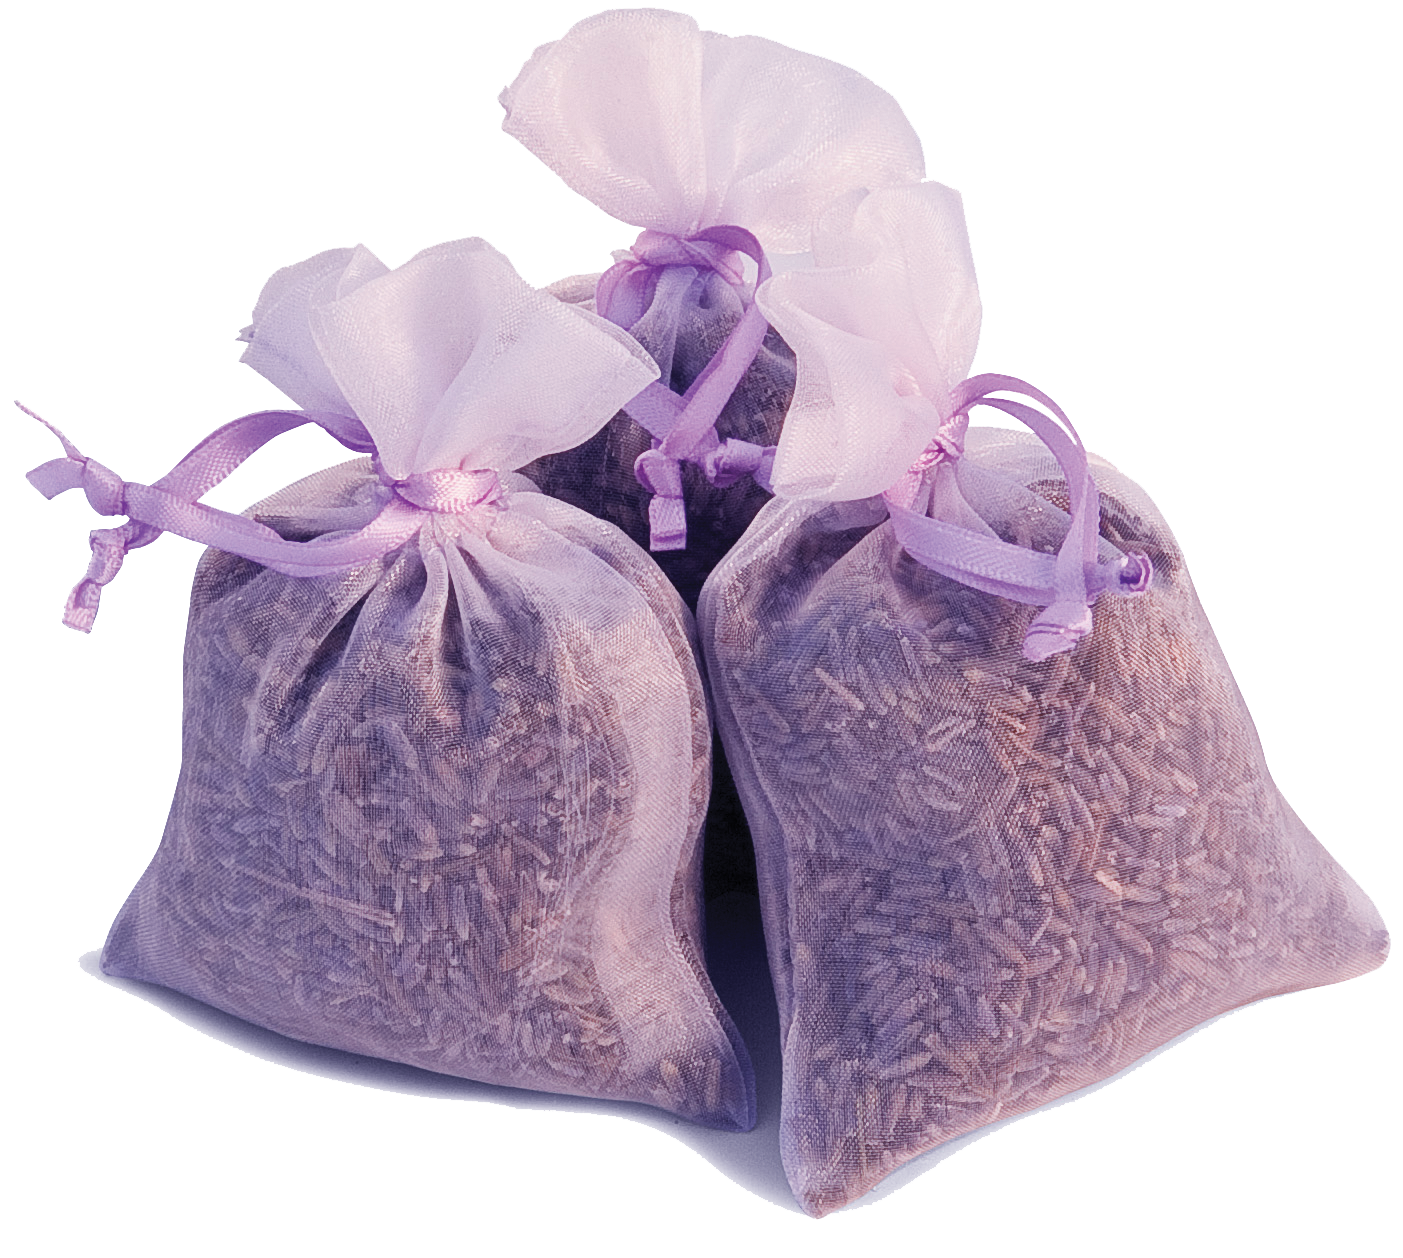 dried lavender bags | lavender gift | harvest breeze westport